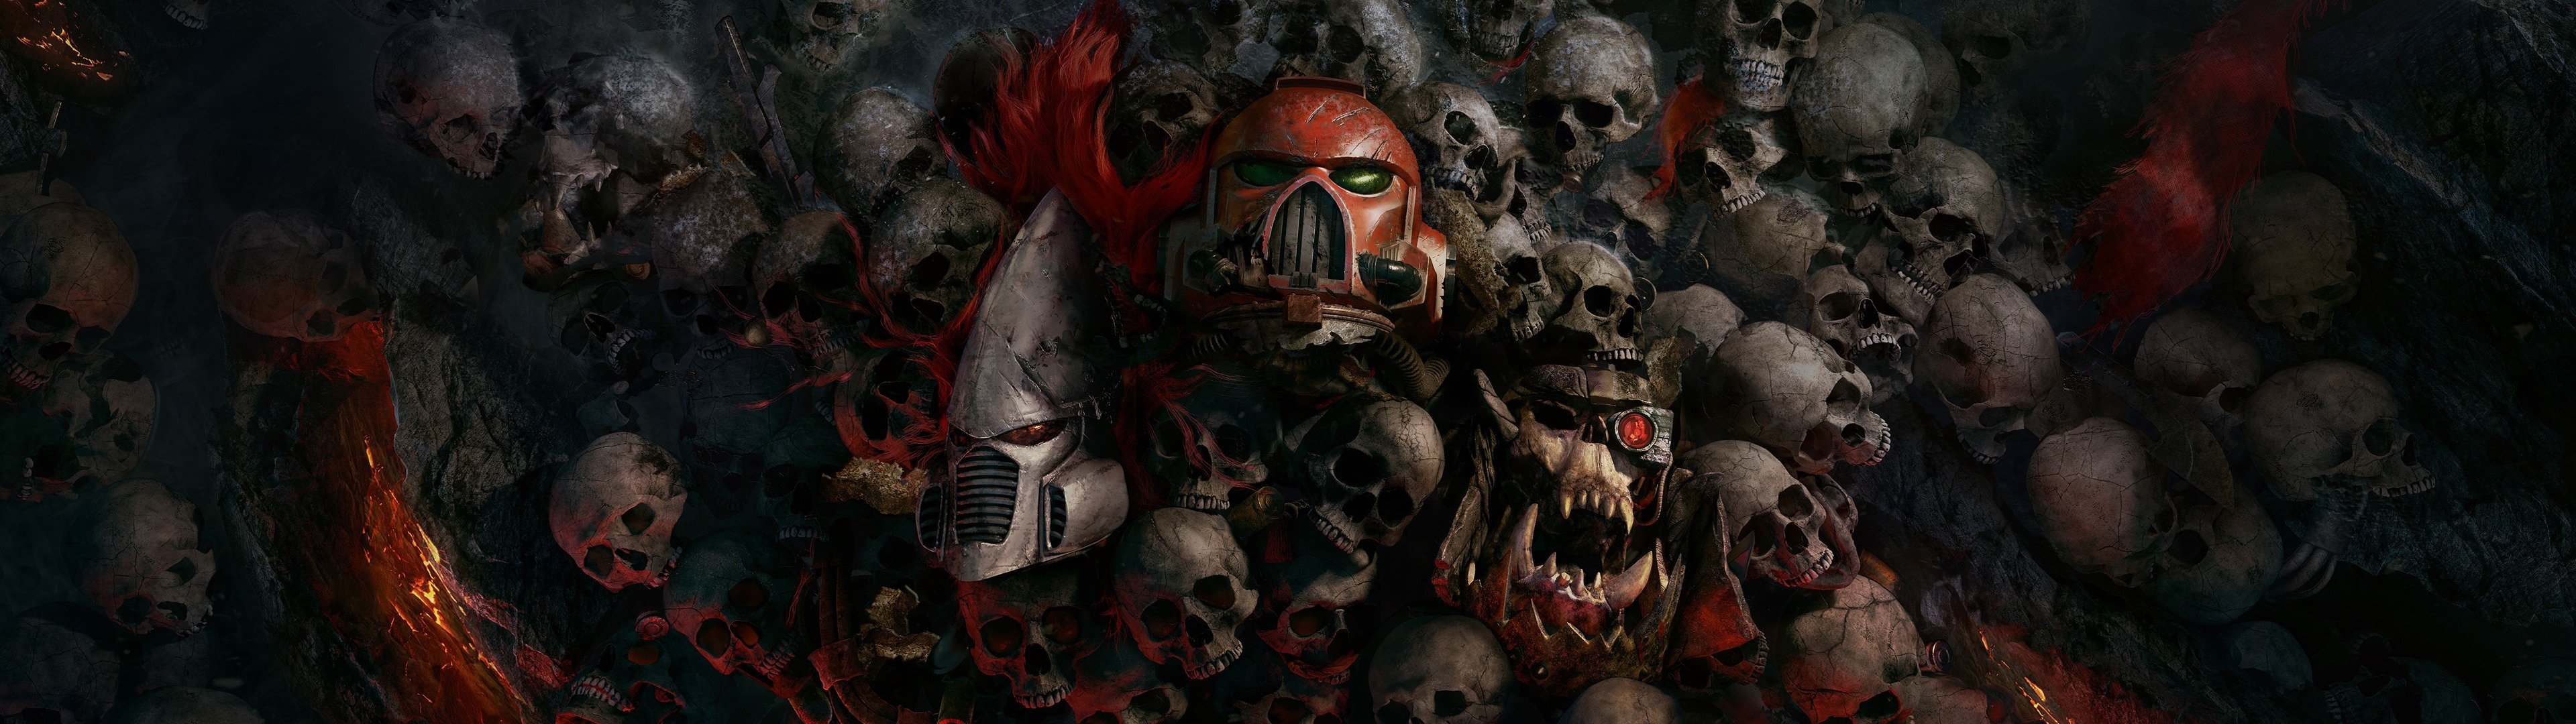 Warhammer 40, 000: Dawn of War  III, Warhammer 40, 000, Warhammer, Space marines, Eldar, Ork, Dawn of War 3 Wallpaper